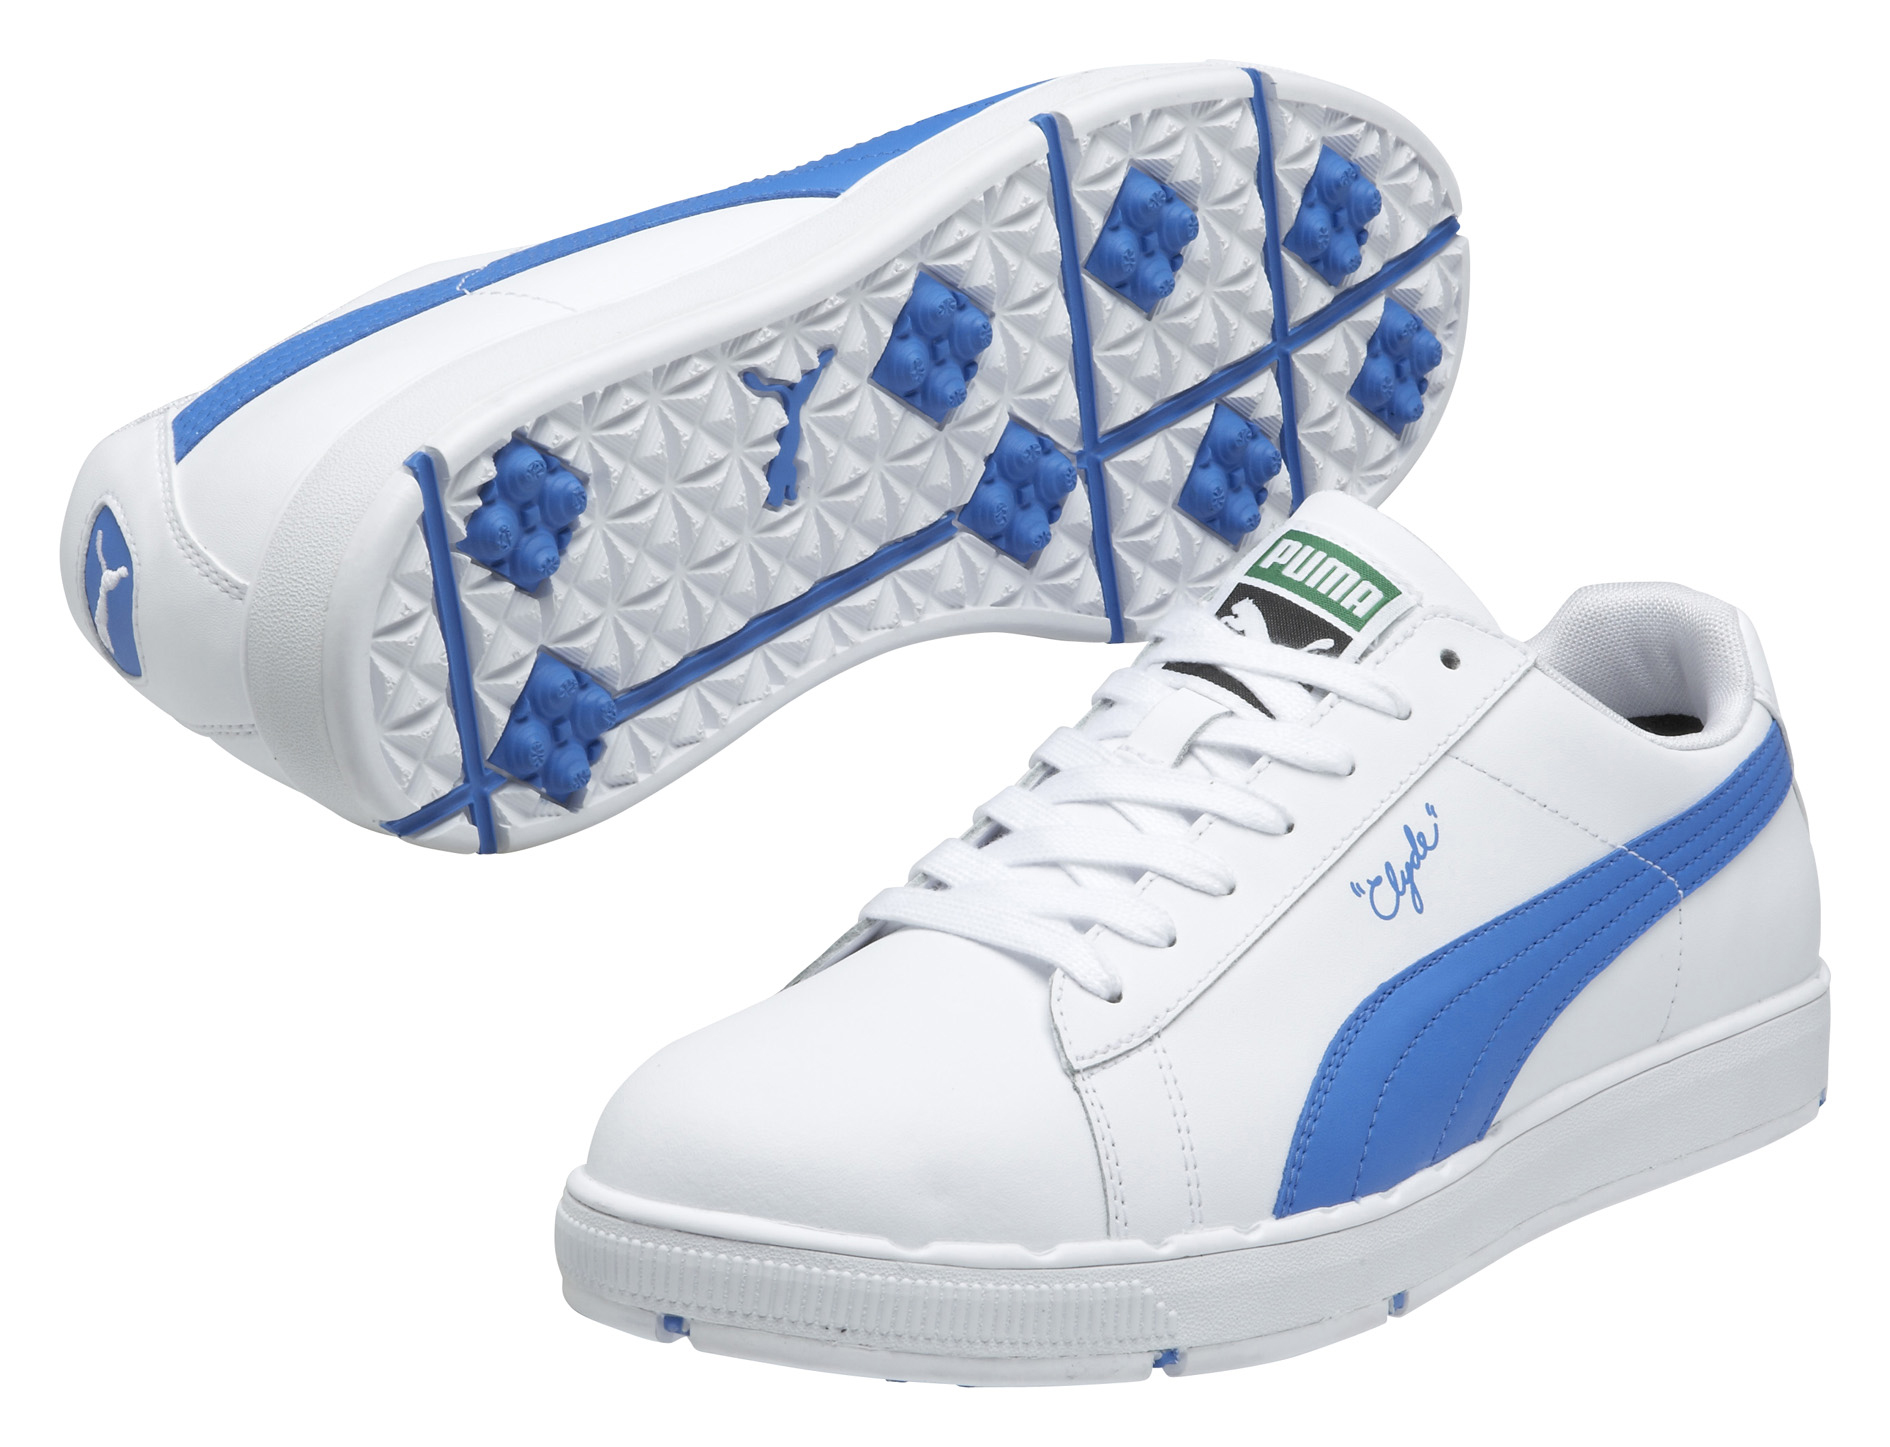 puma clyde golf shoes uk